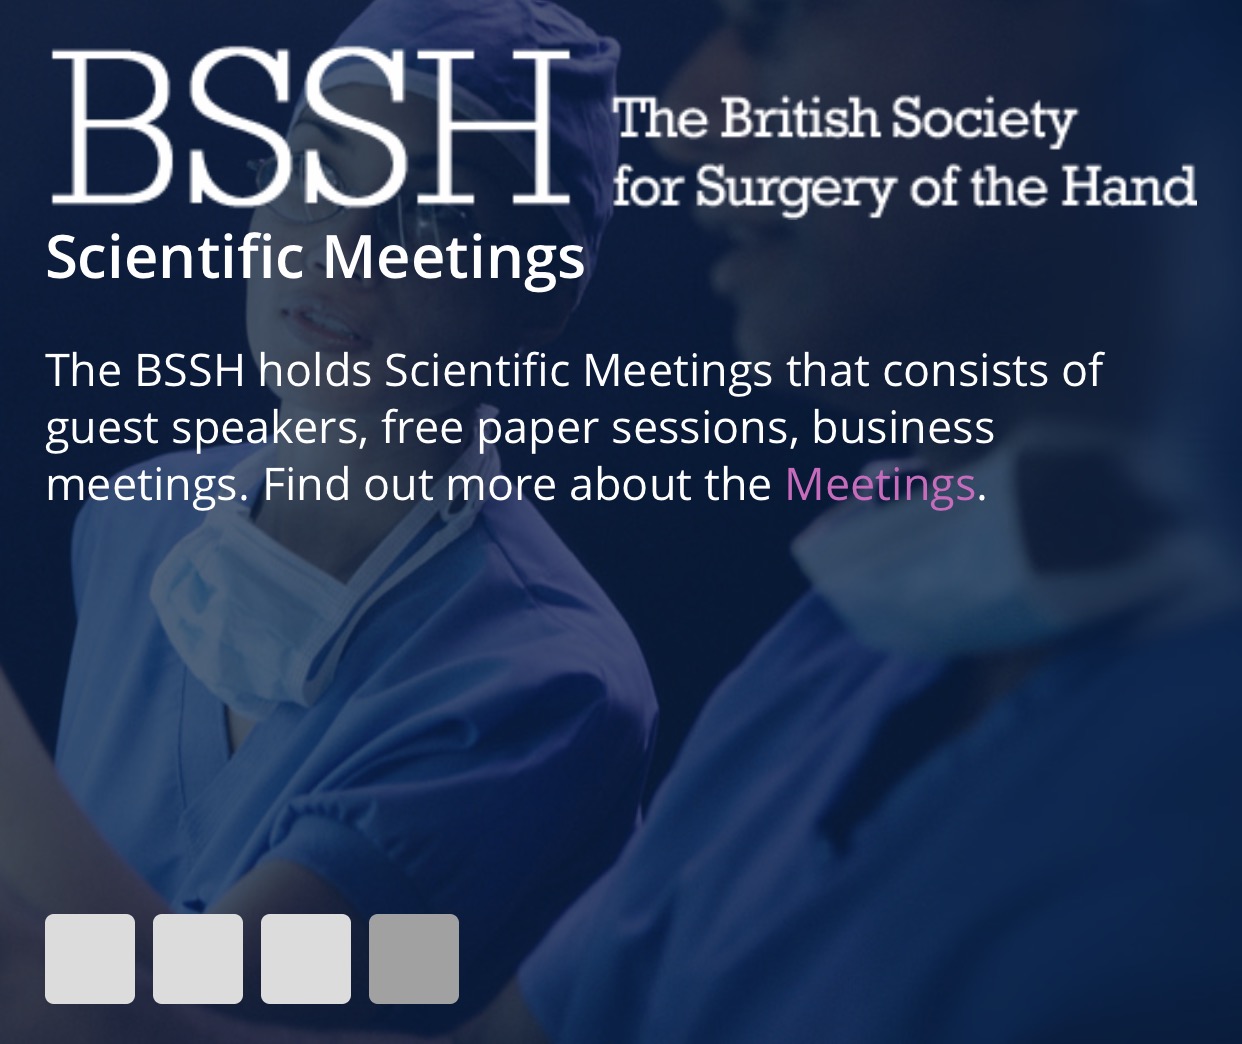 BSSH Council Meeting January 2018